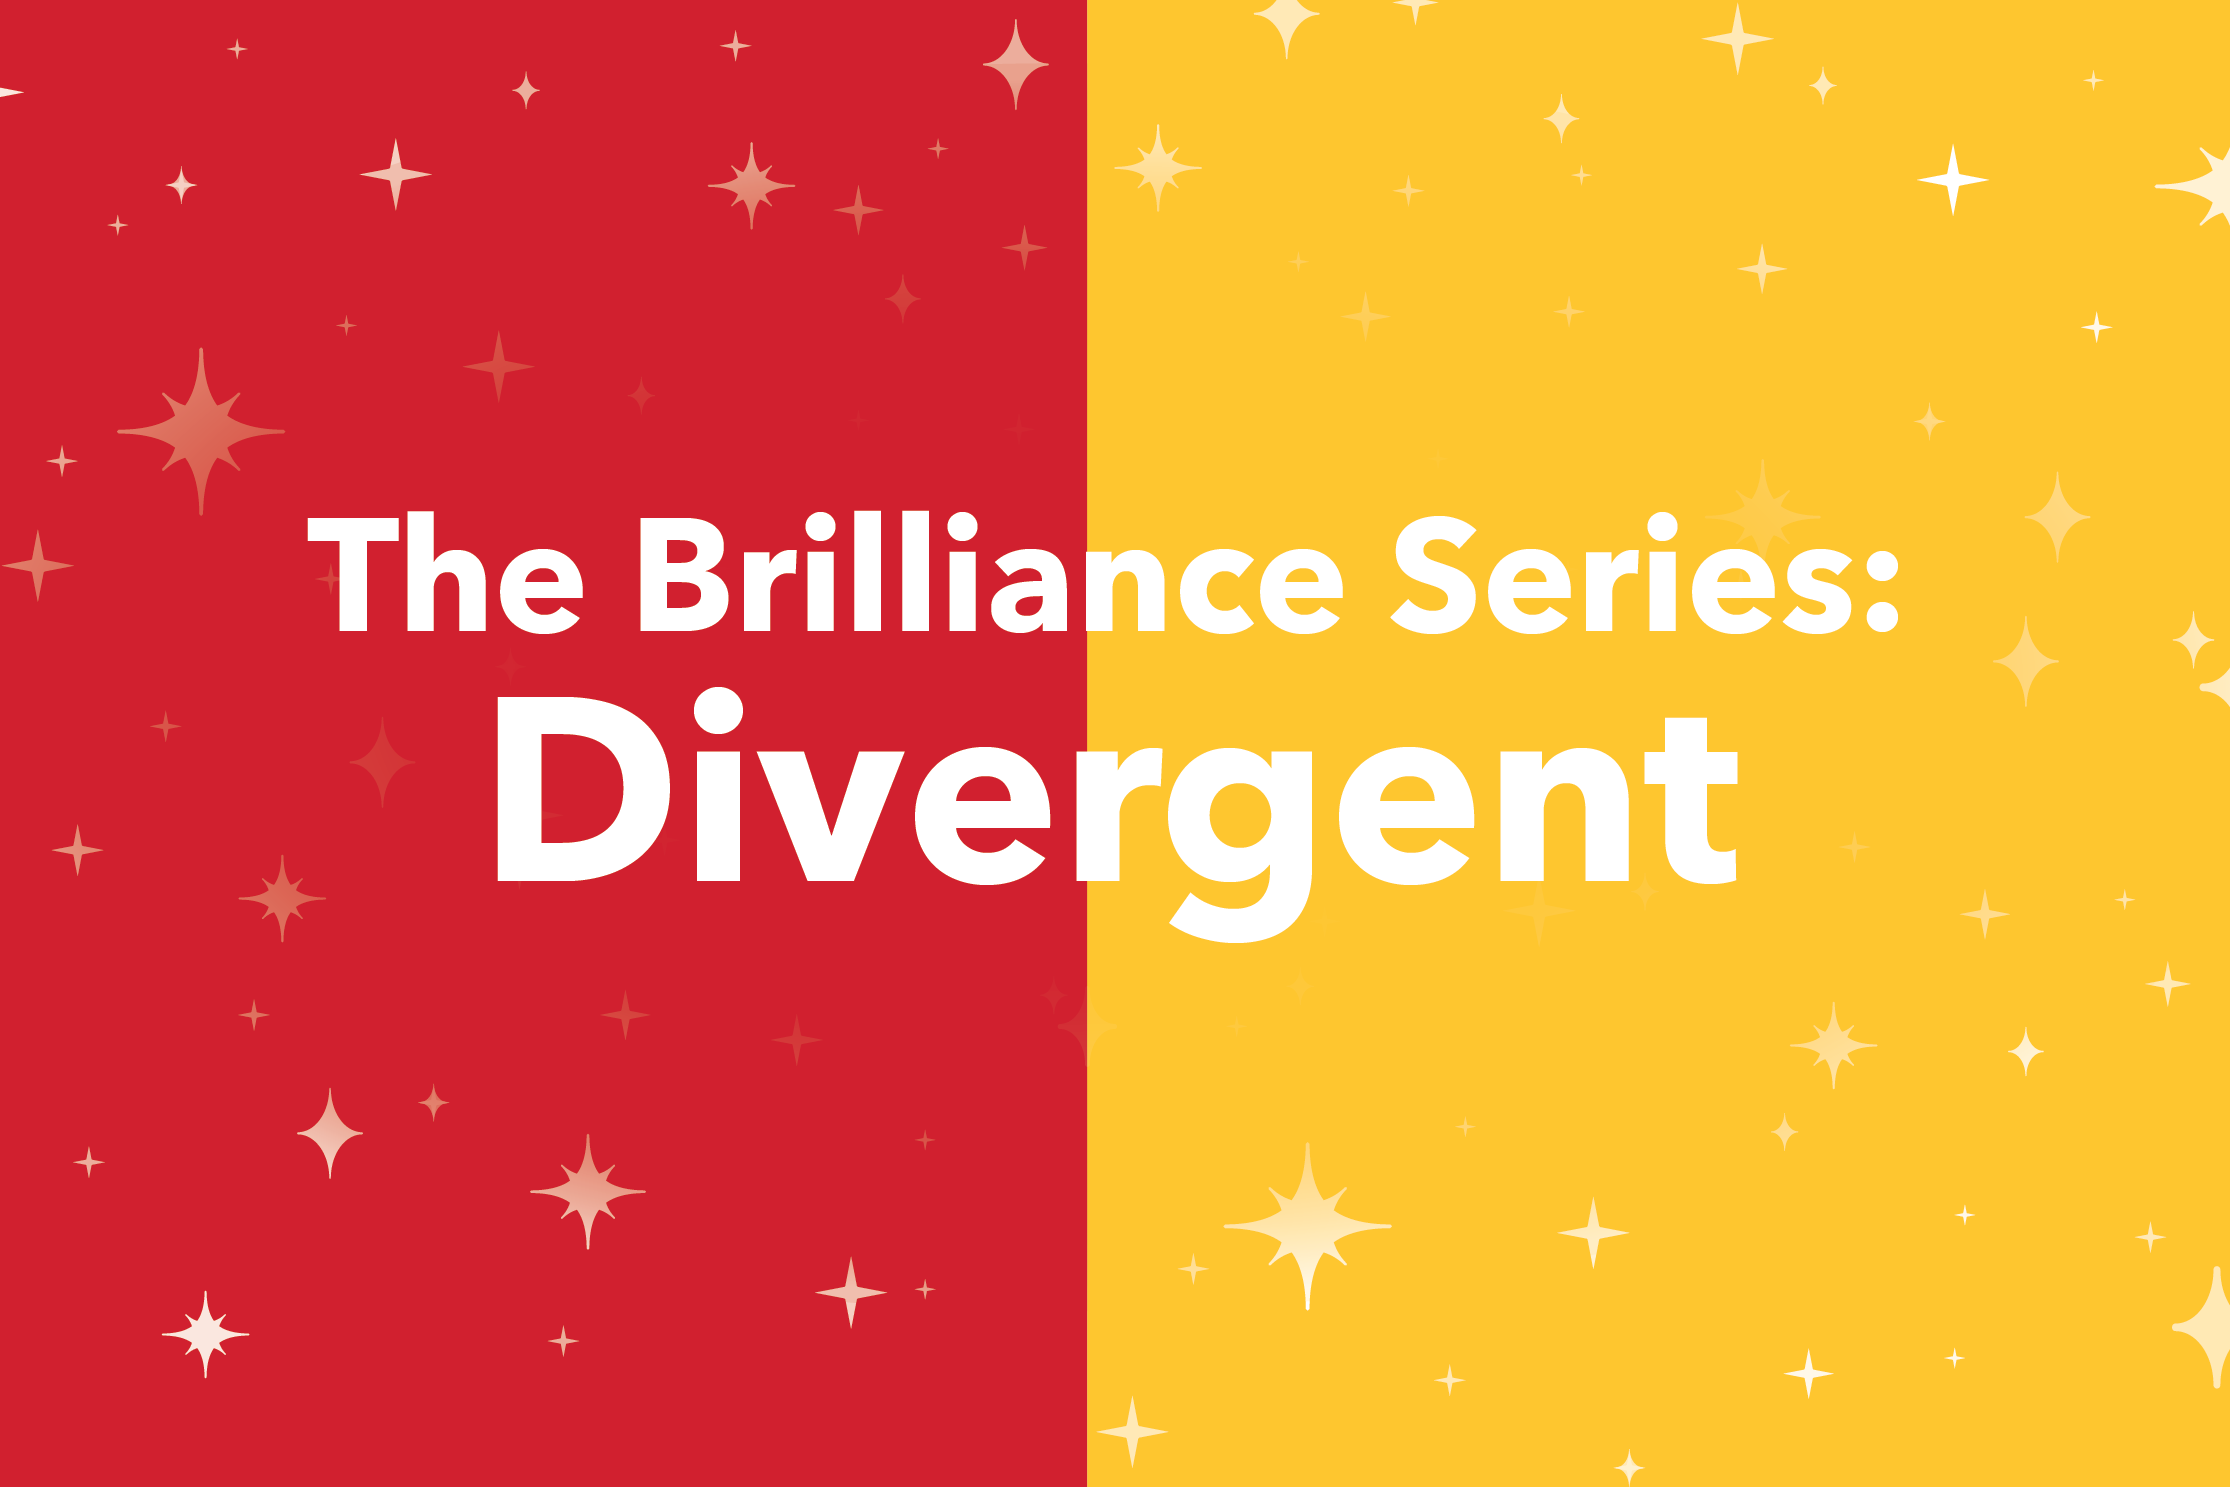 The Brilliance Series: Divergent